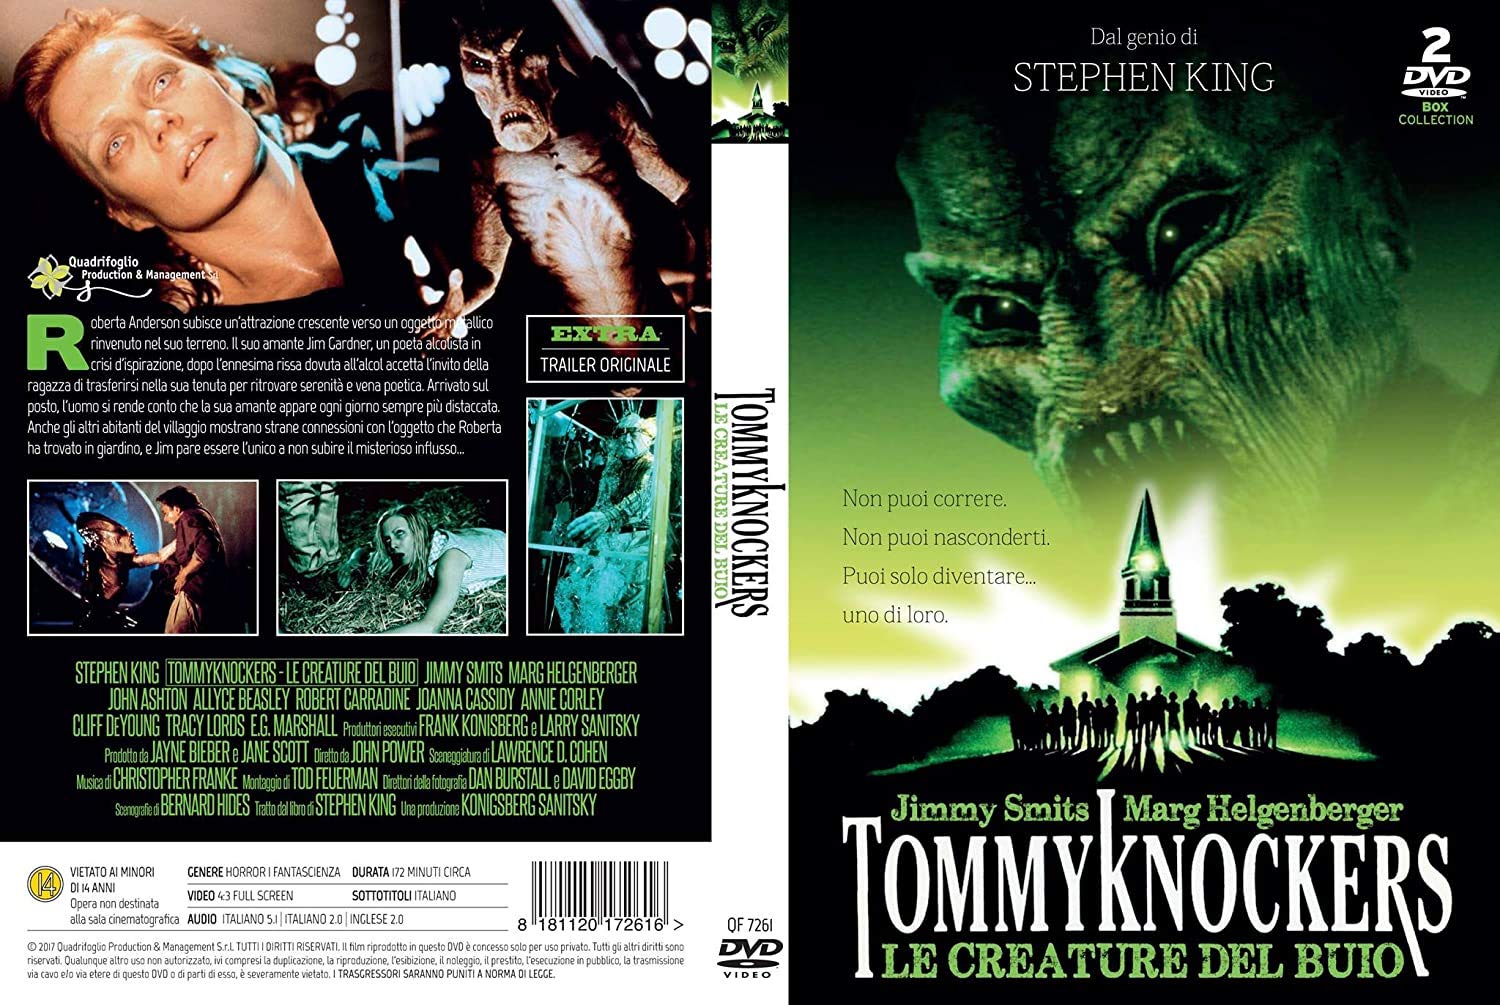 Stephen King - Tommyknockers 1993- DvD 2